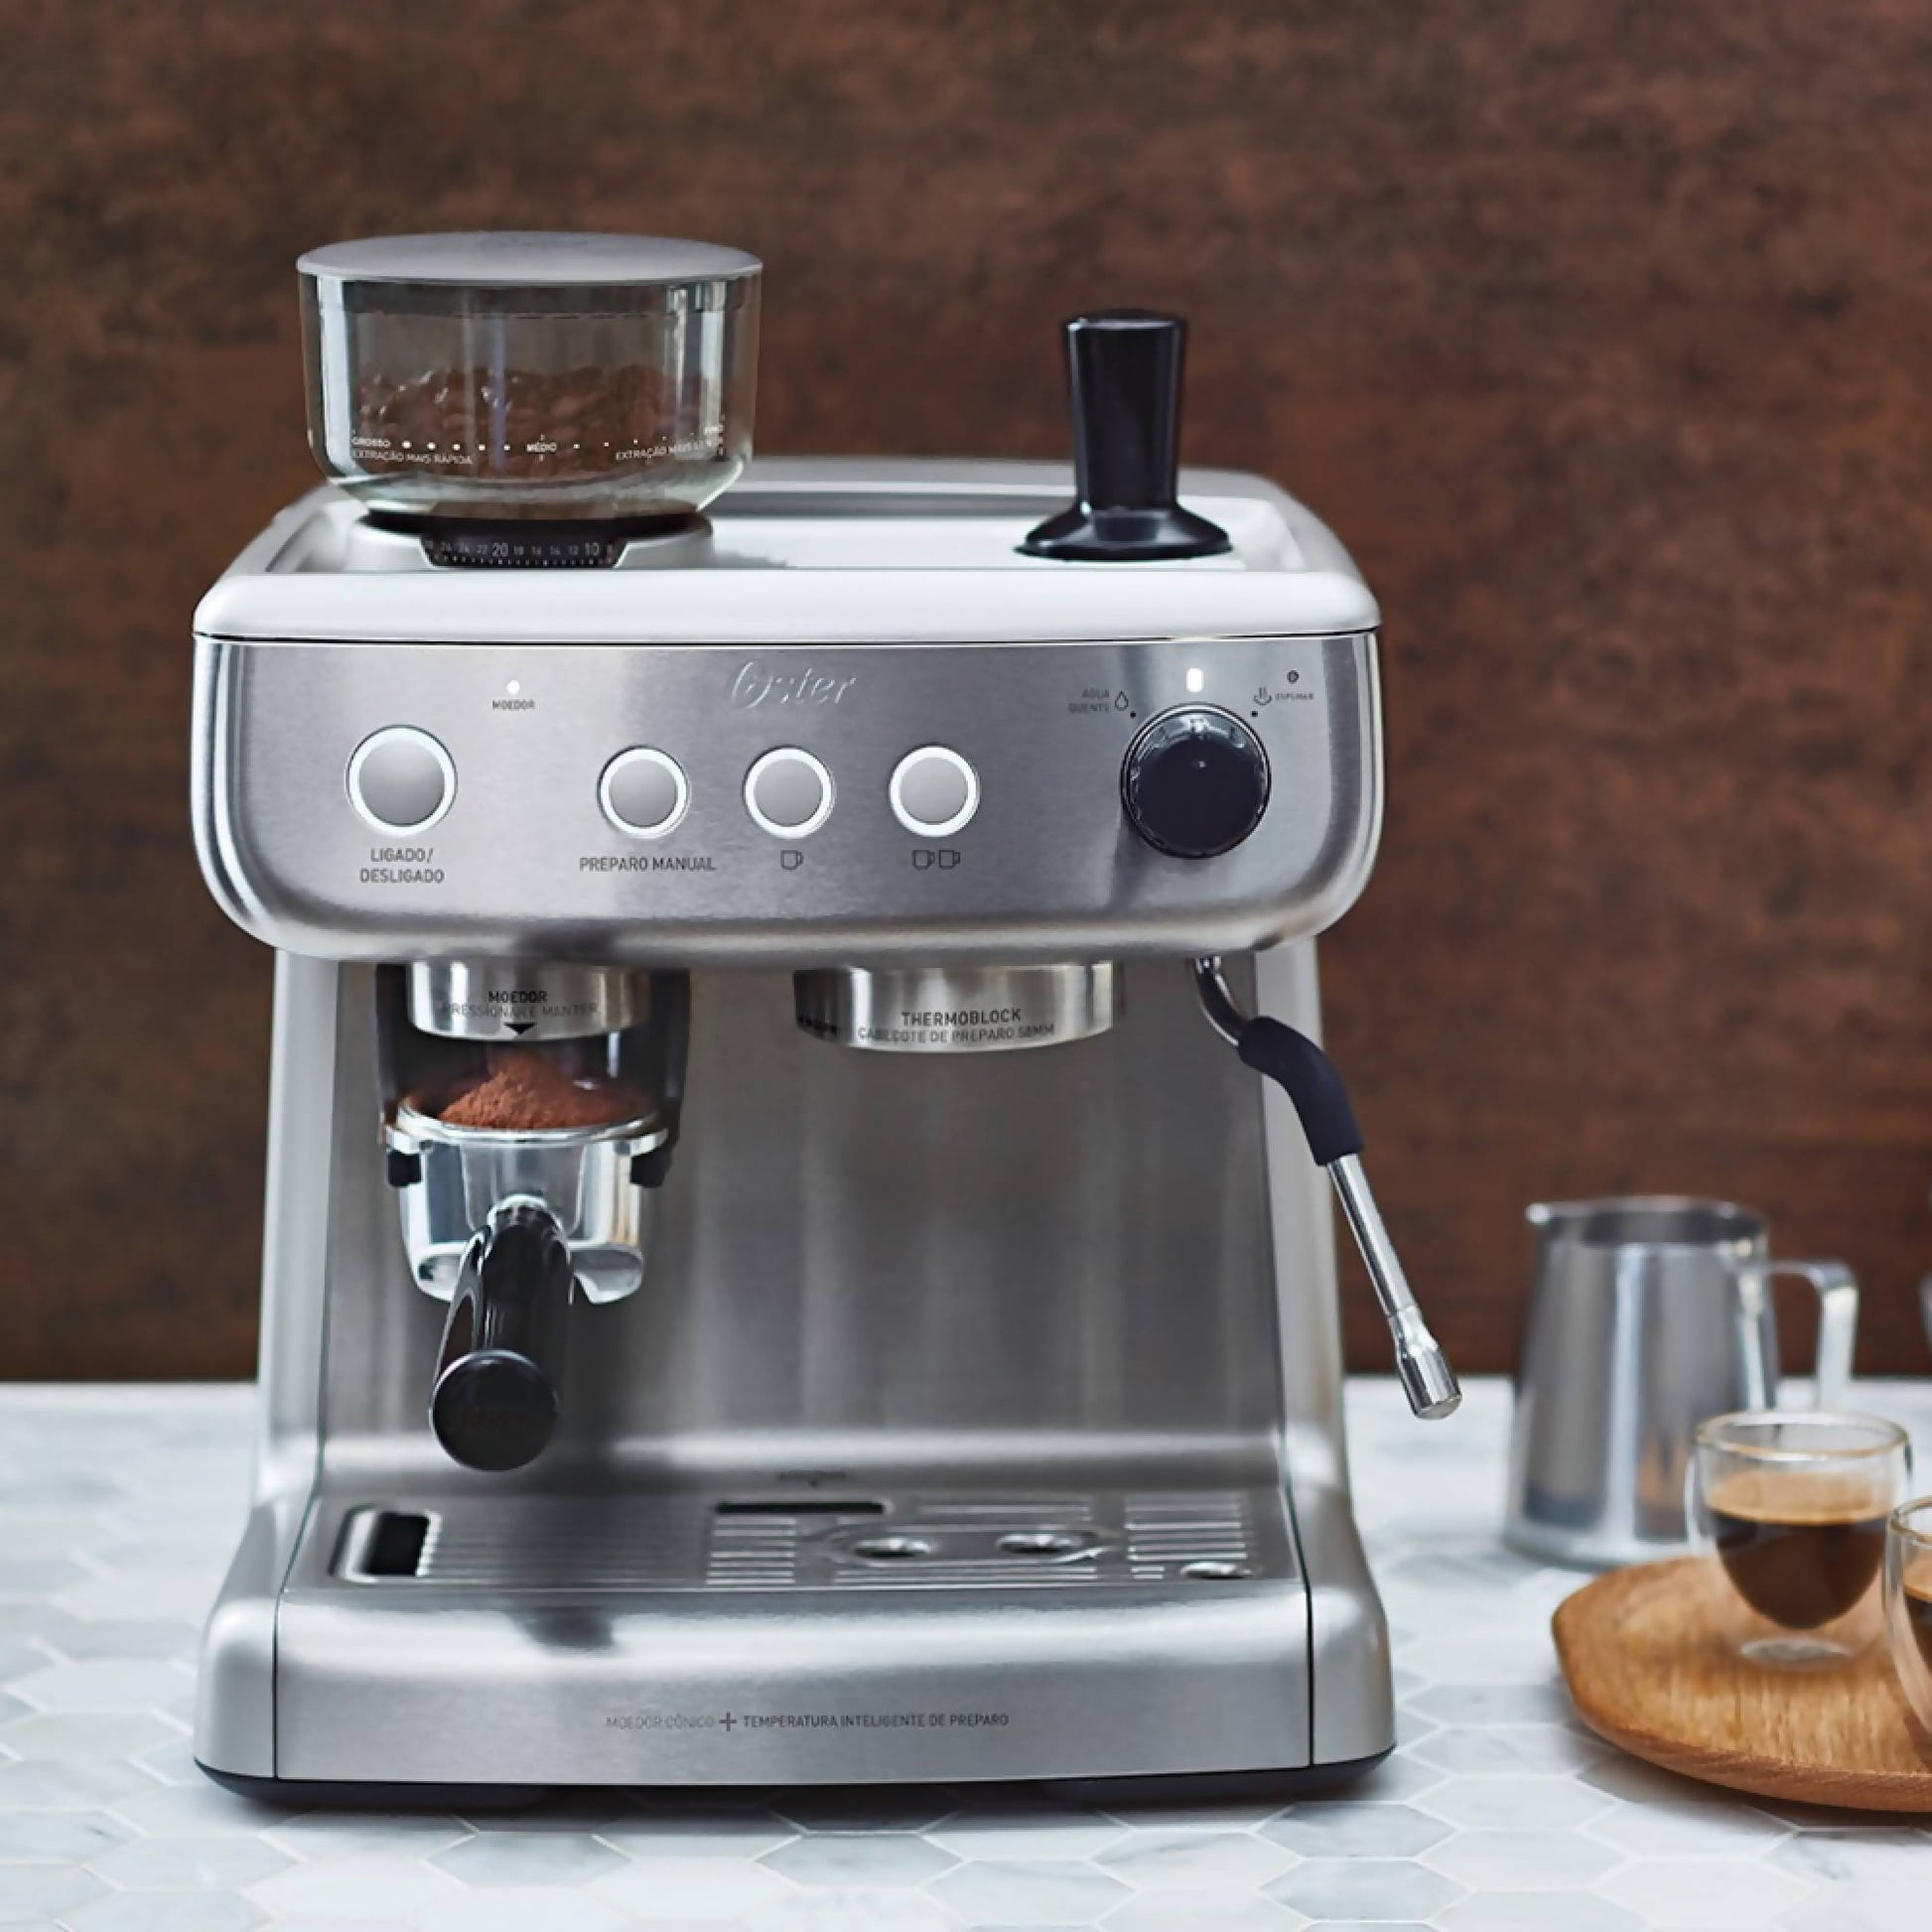 Cafetera Espresso Perfect Brew Molino Integrado BVSTEM7300 Oster1#Gris